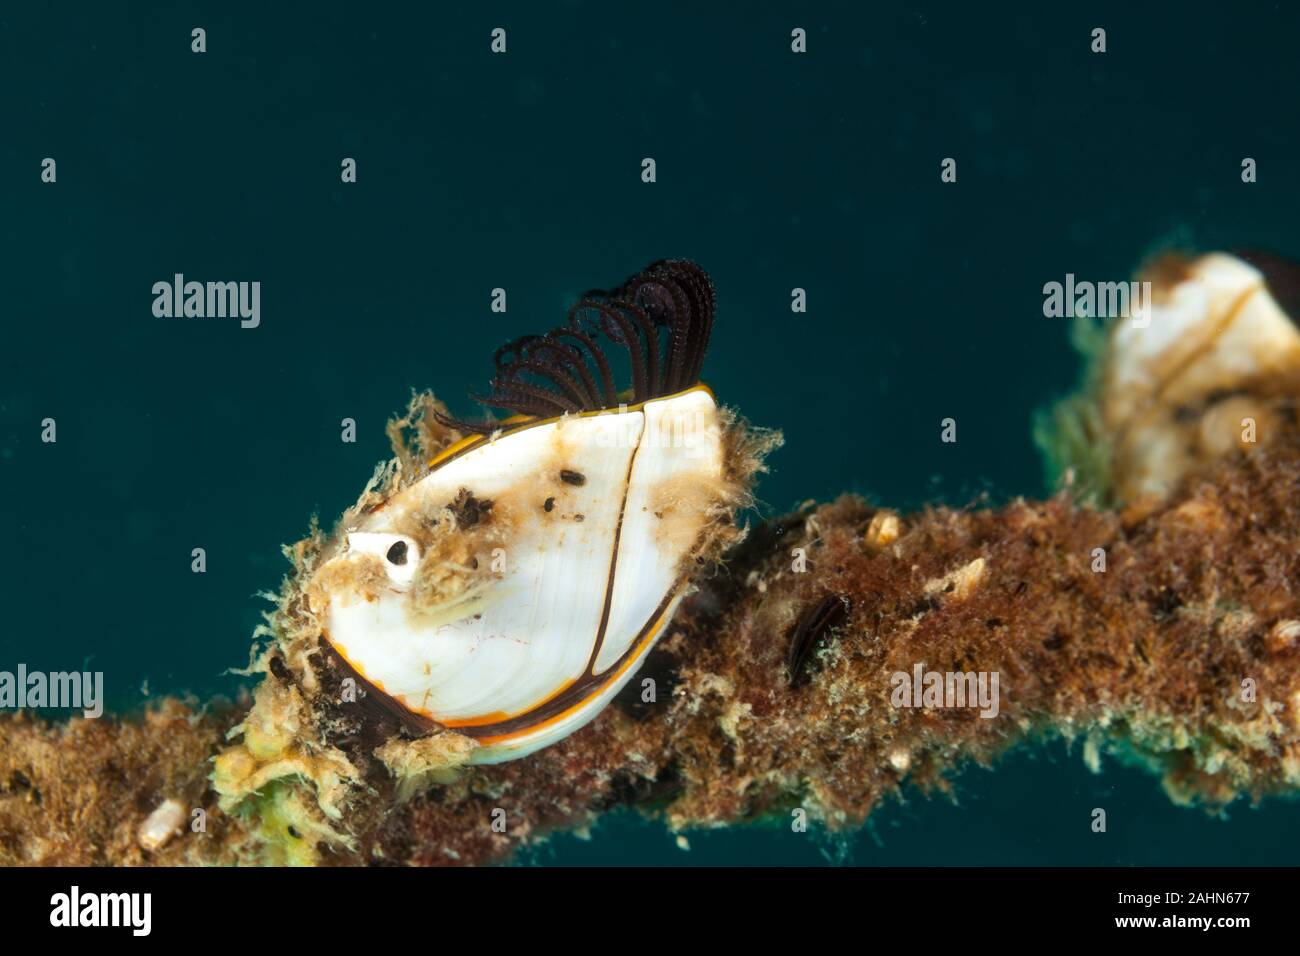 Pesca pelagica a collo d'oca barnacle o liscia a collo d'oca barnacle, Lepas anatifera Foto Stock